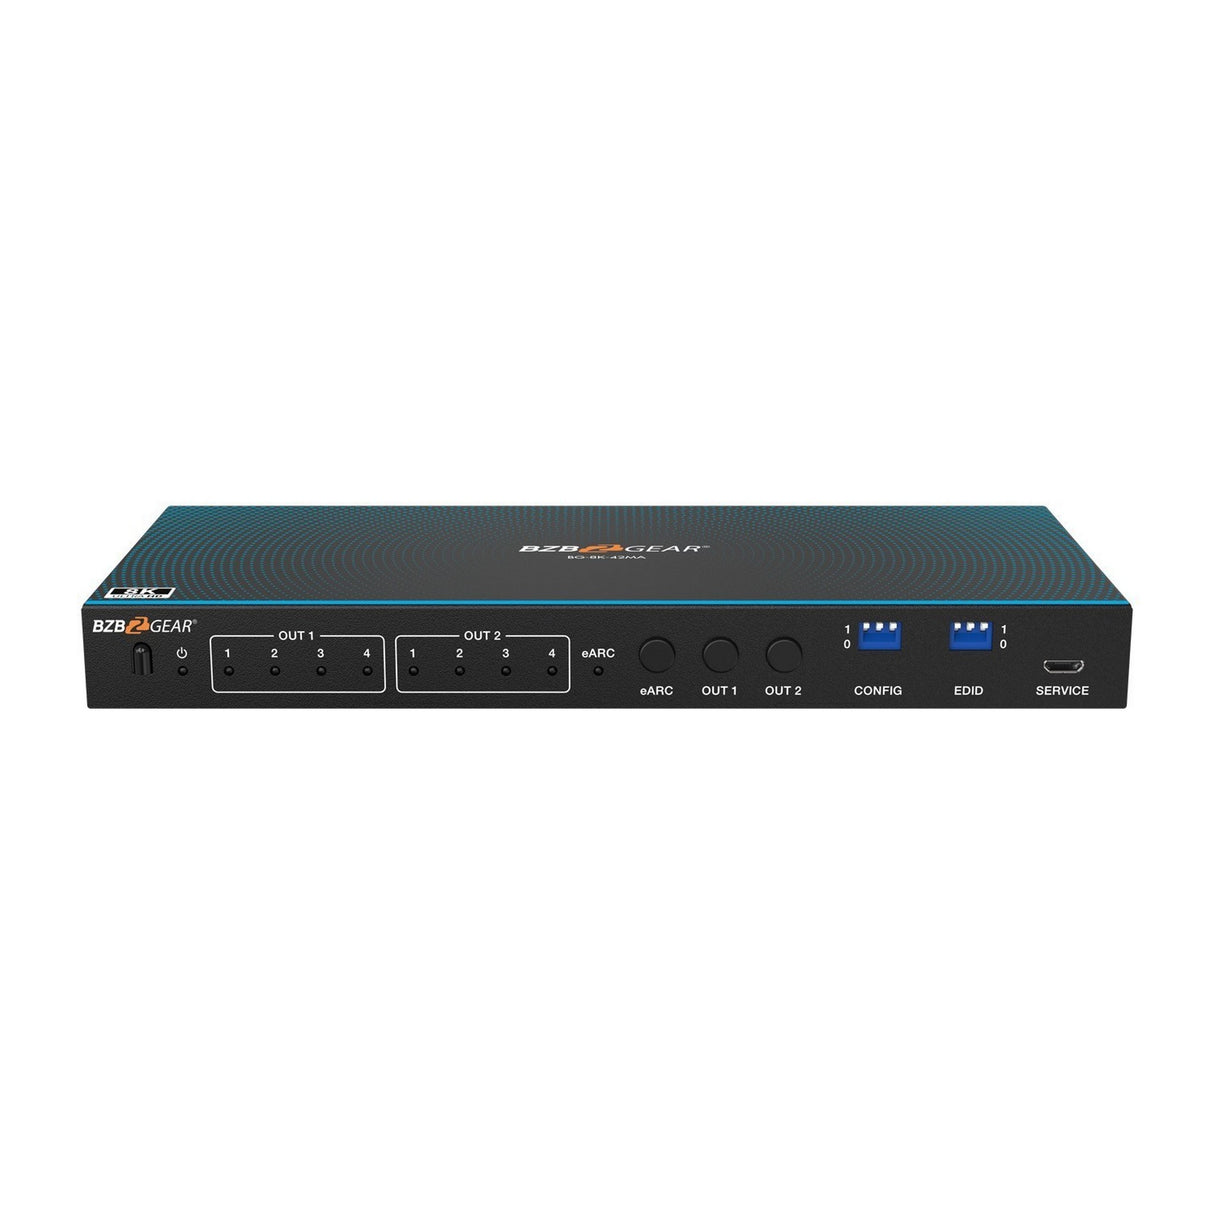 BZBGEAR BG-8K-42MA 4×2 8K UHD HDMI 2.1 Matrix Switcher with Audio De-embedder